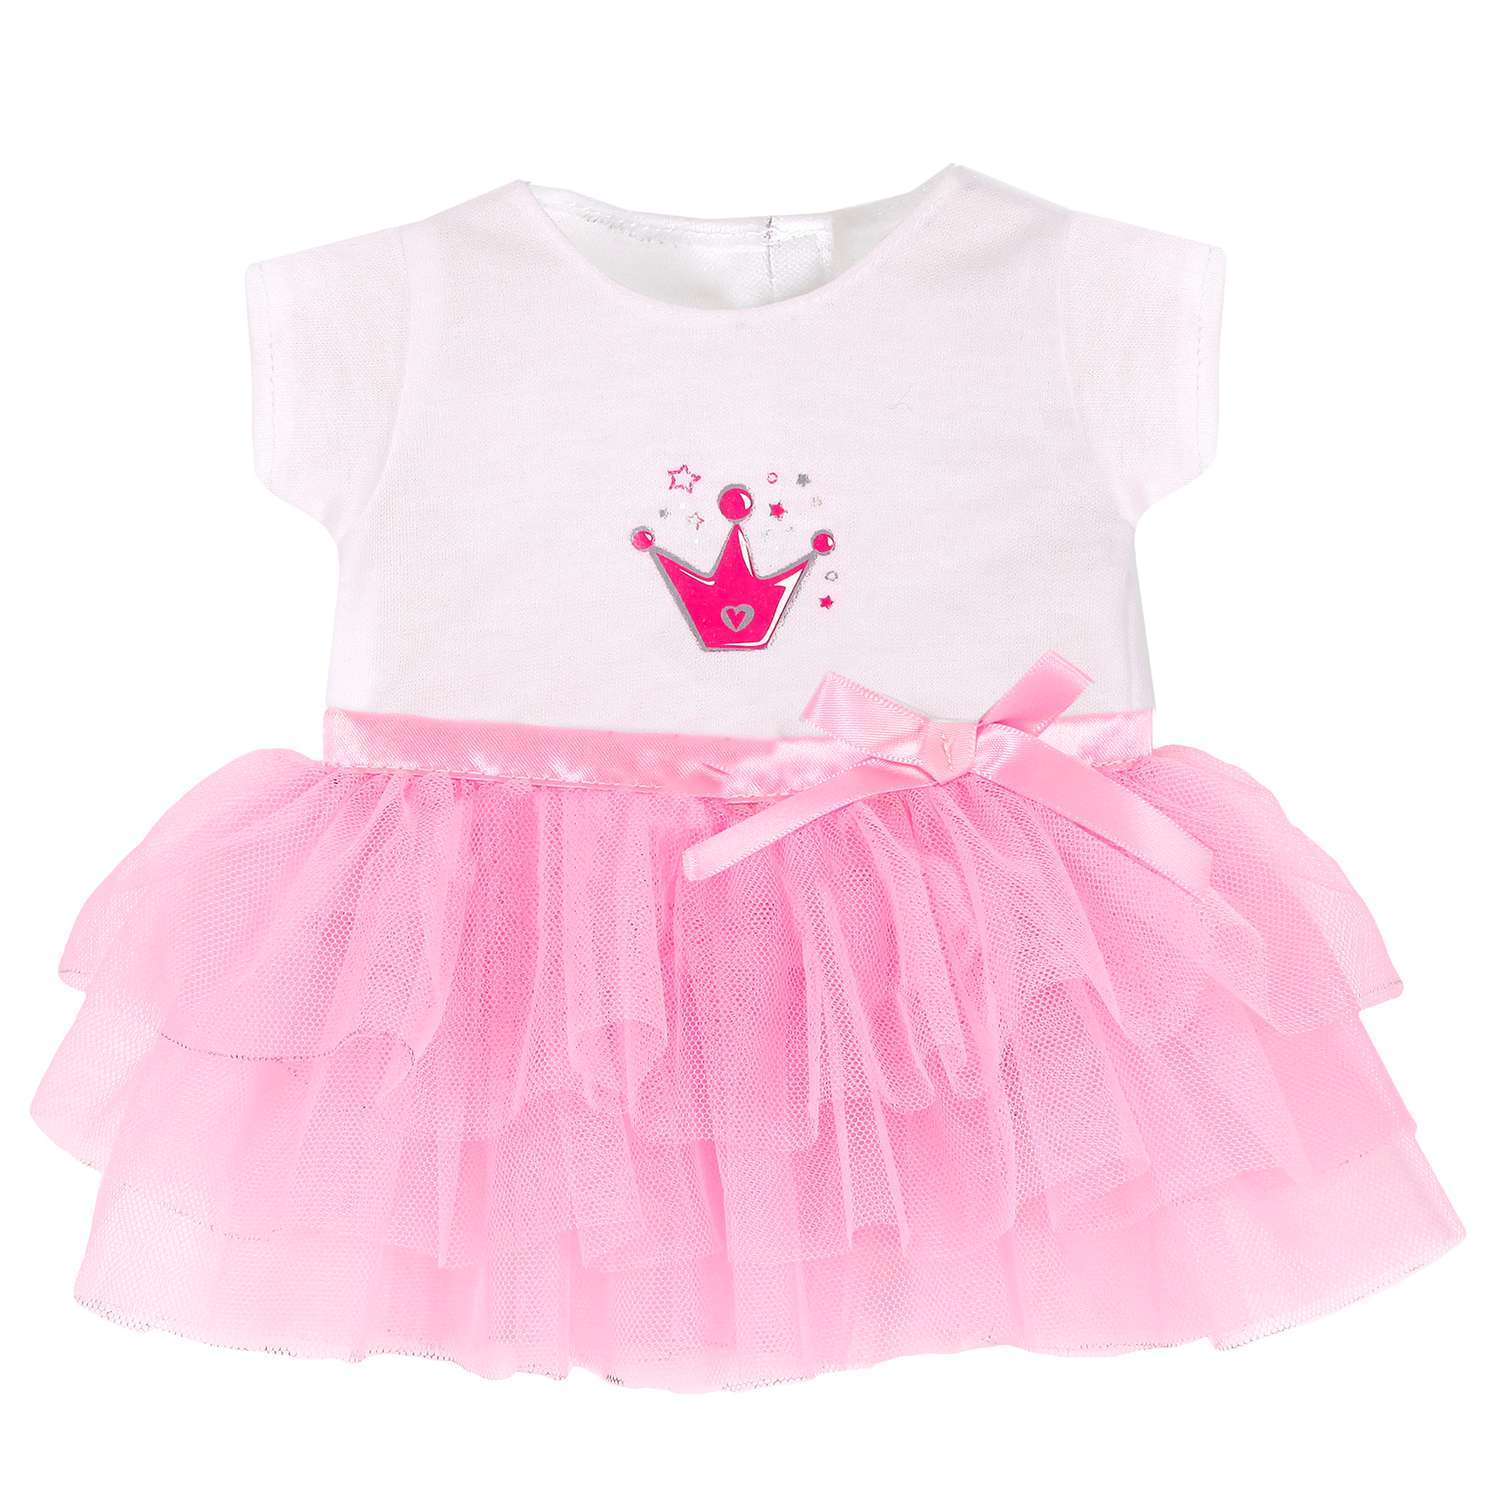 Одежда для куклы Mary Poppins Юбка и футболка Принцесса 38-43 см 452146 - фото 2